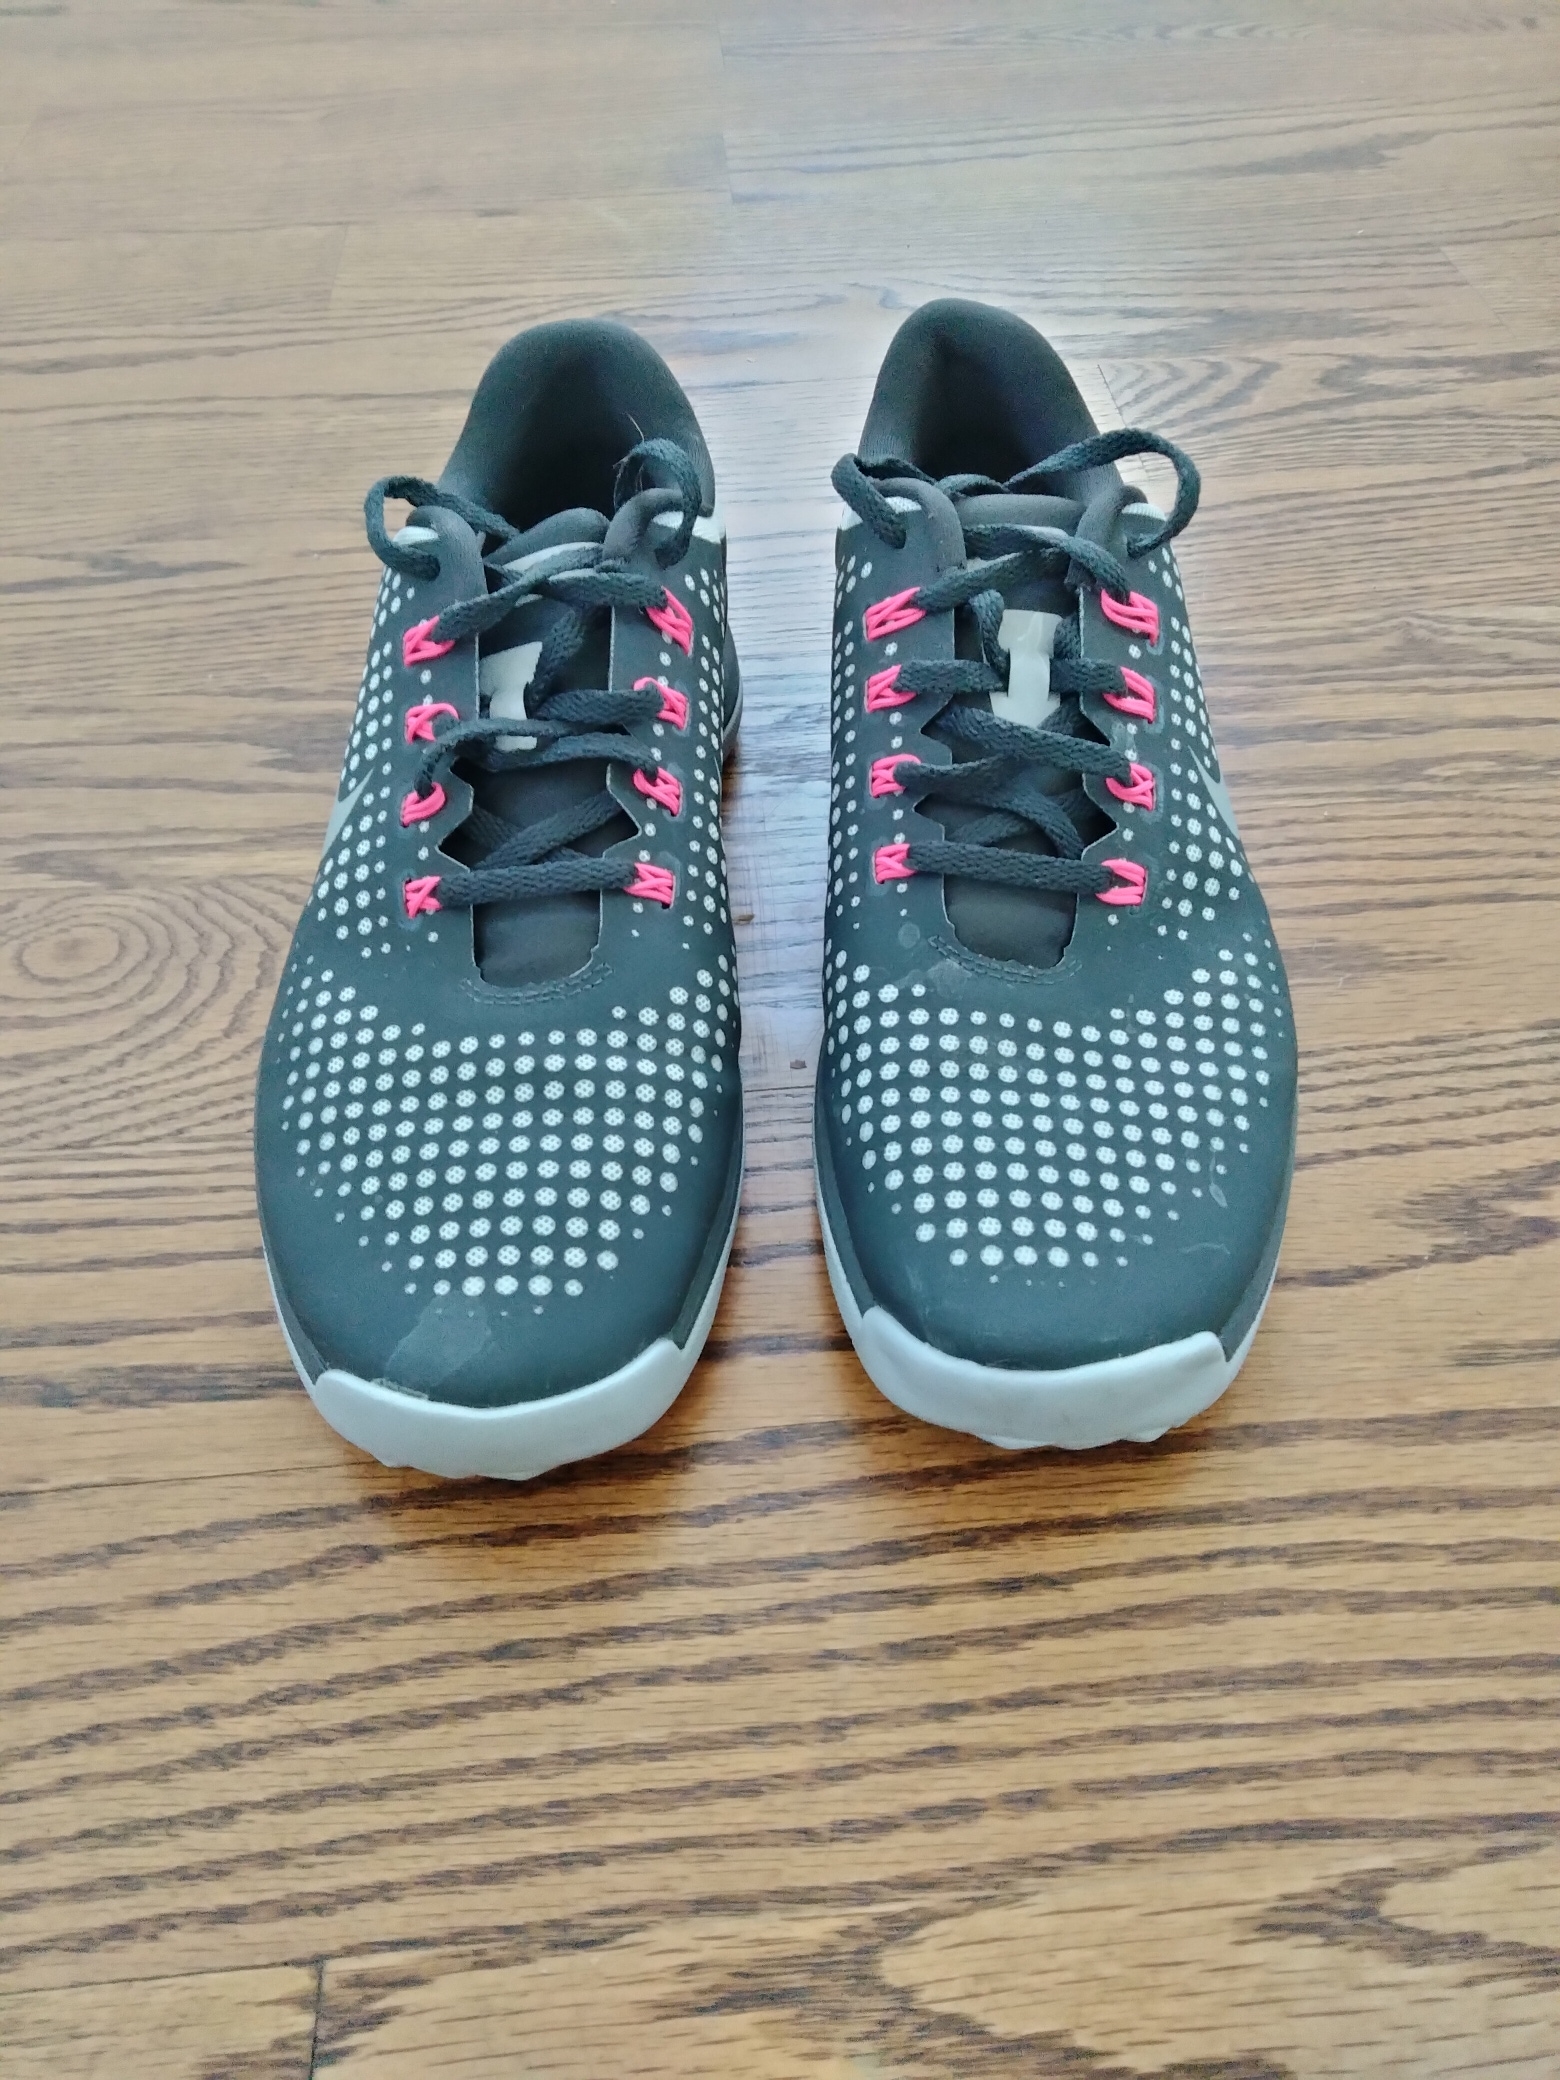 Used Women's Size 8.0 (Women's 9.0) Nike Lunarlon Golf Shoes